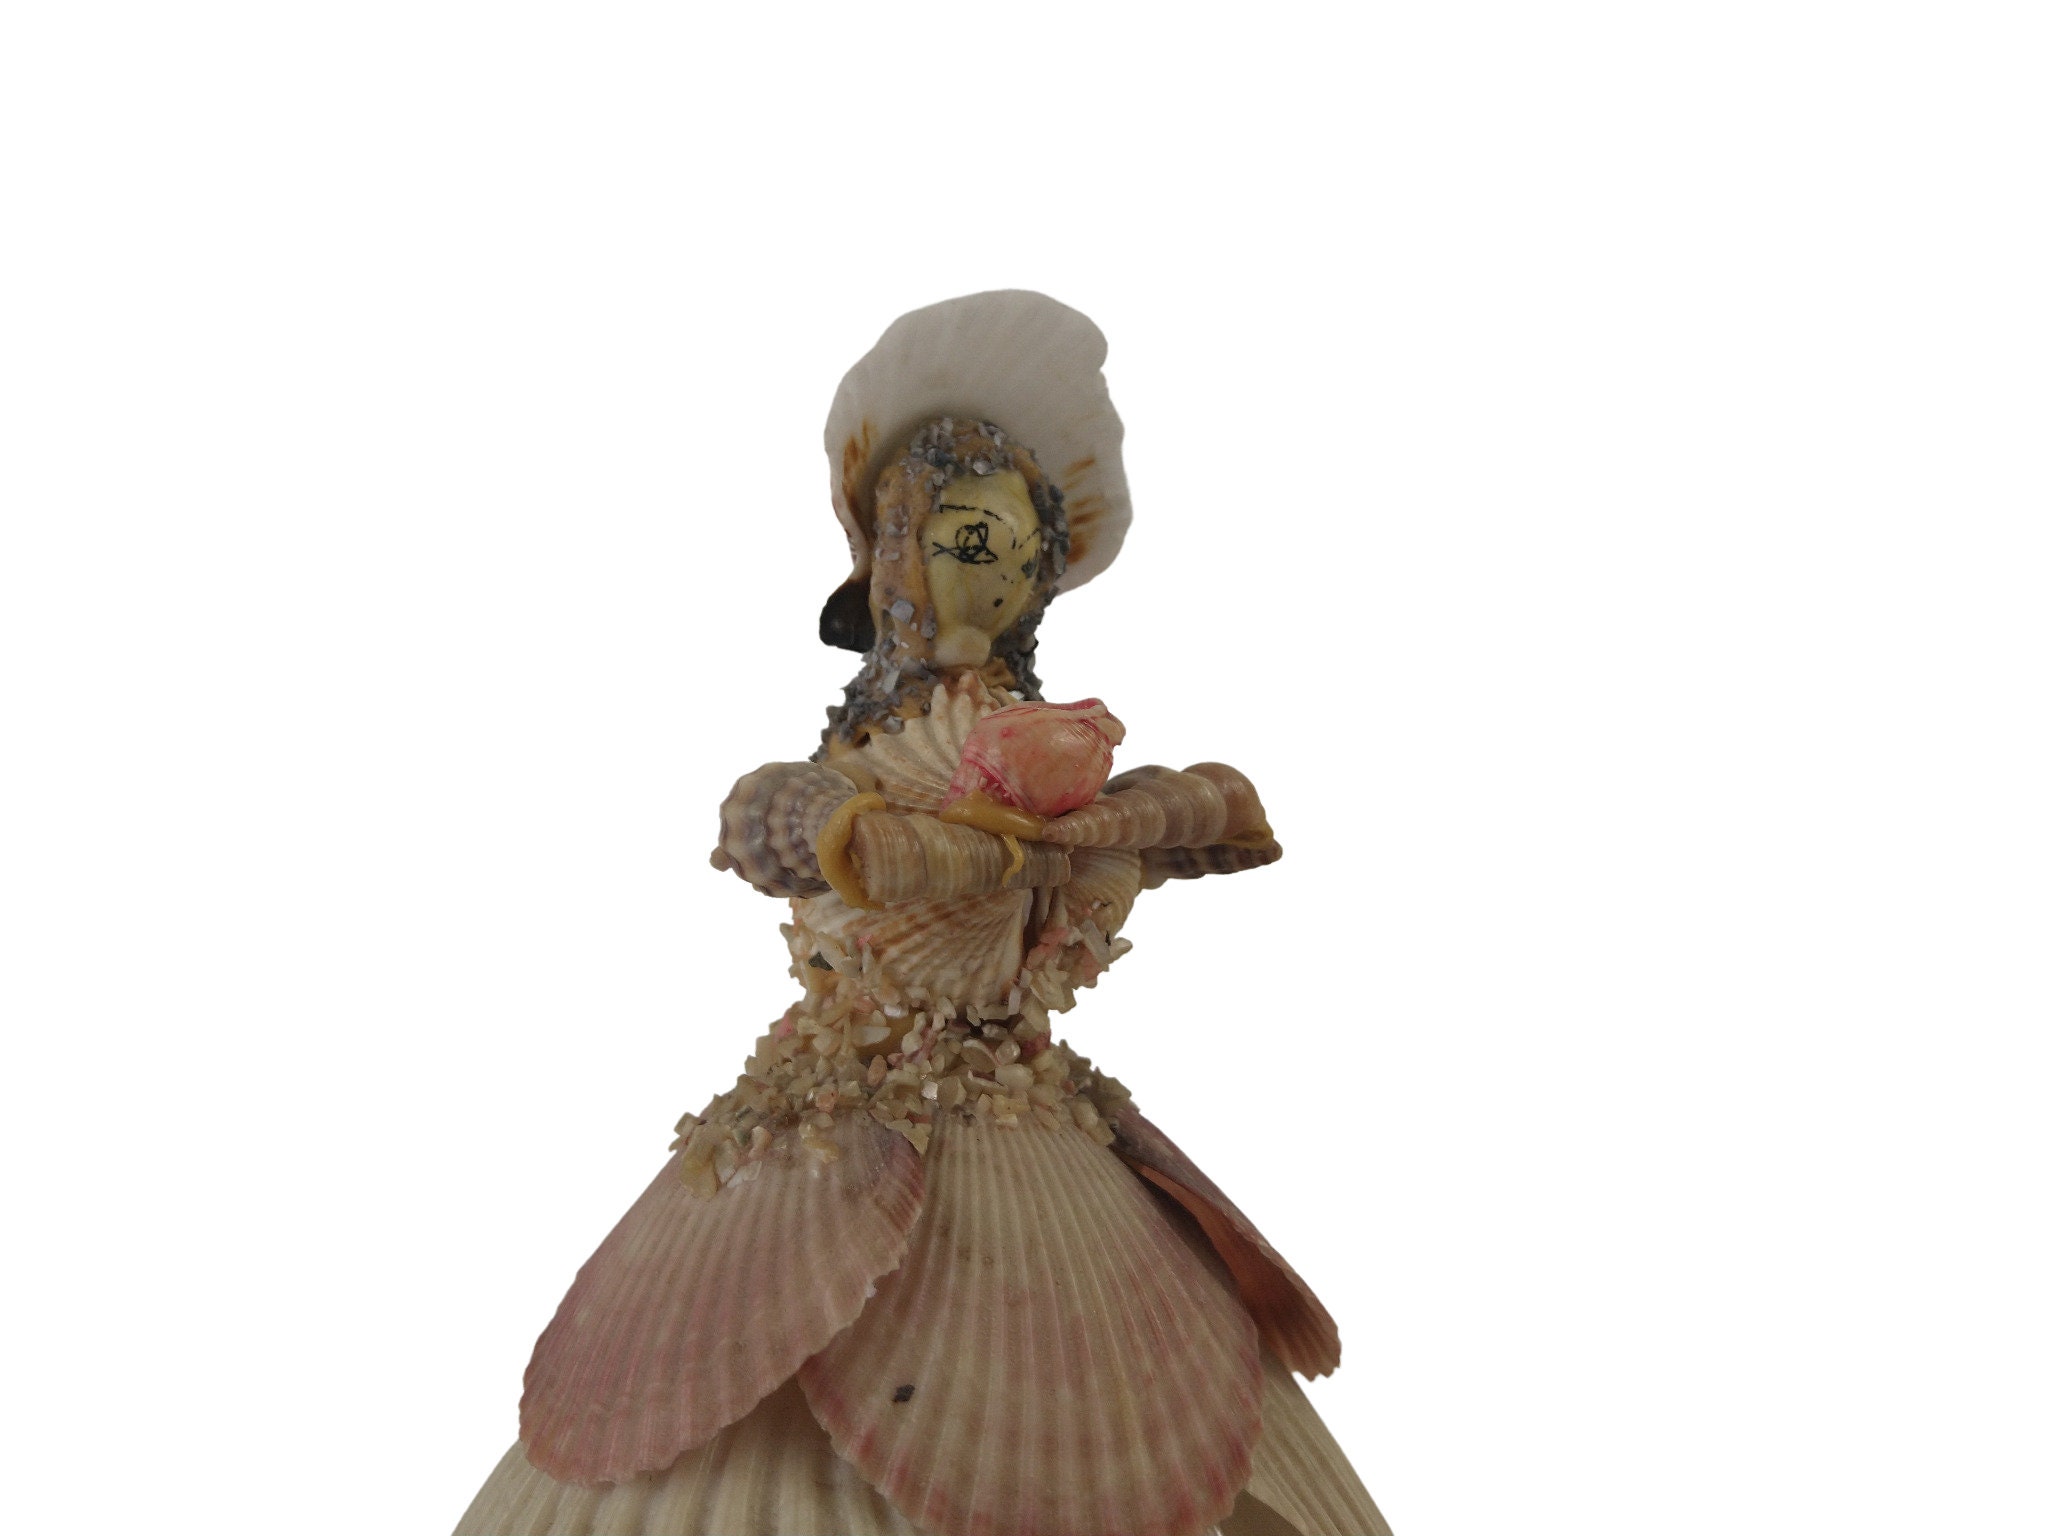 Vintage Sea Shell Lady Figurine, French Seashell Art Souvenir